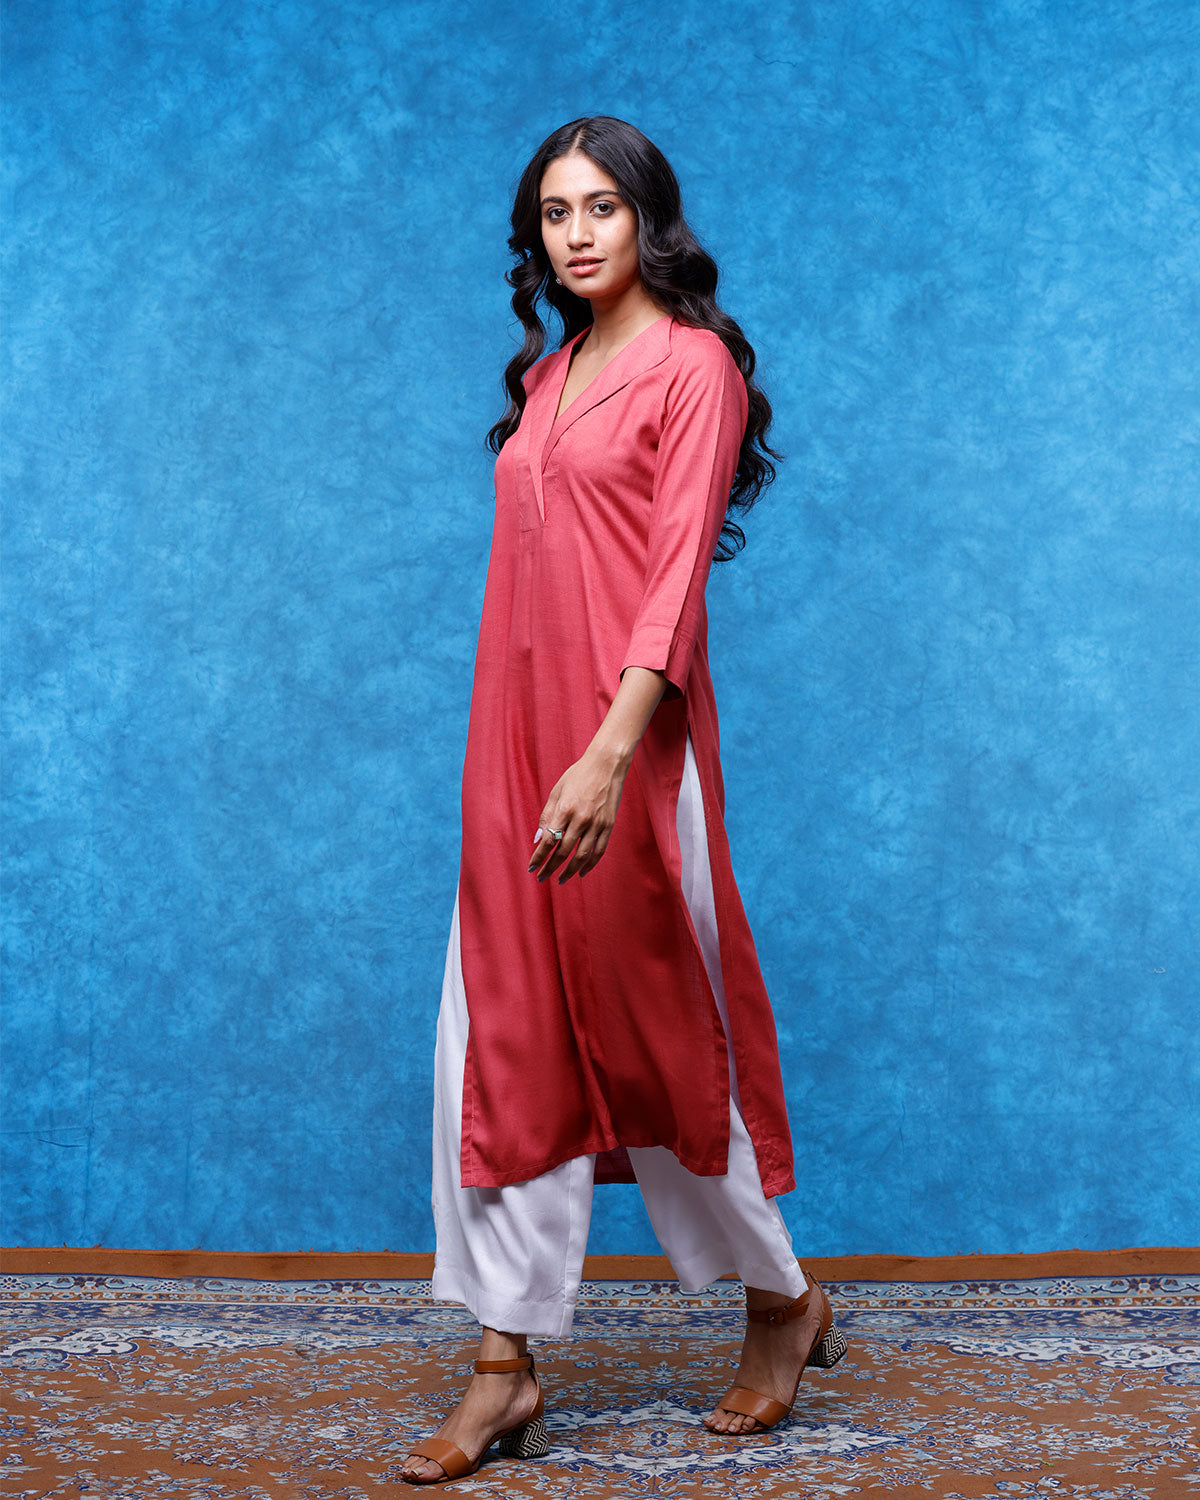 rabeeca Khan 7 beautiful dresses ideas for girls | TikTok